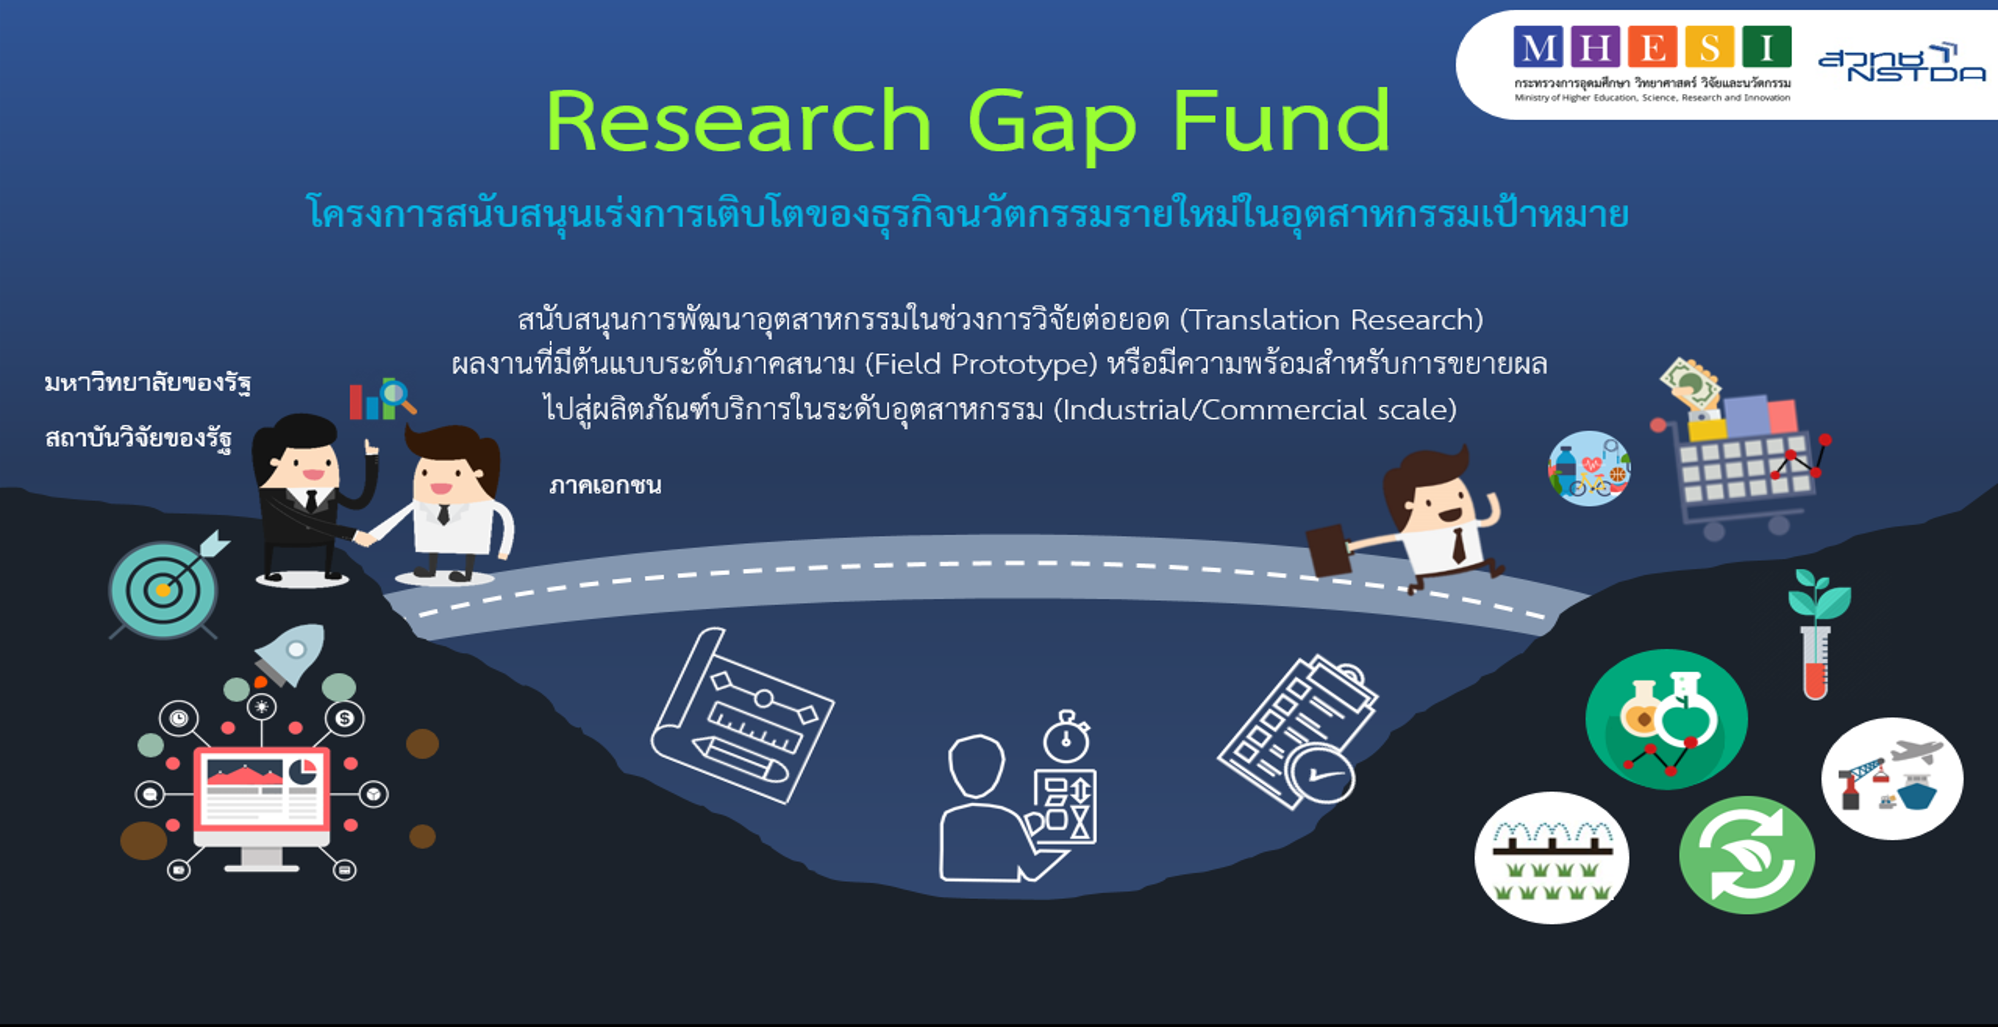 Research Gap Fund 2562